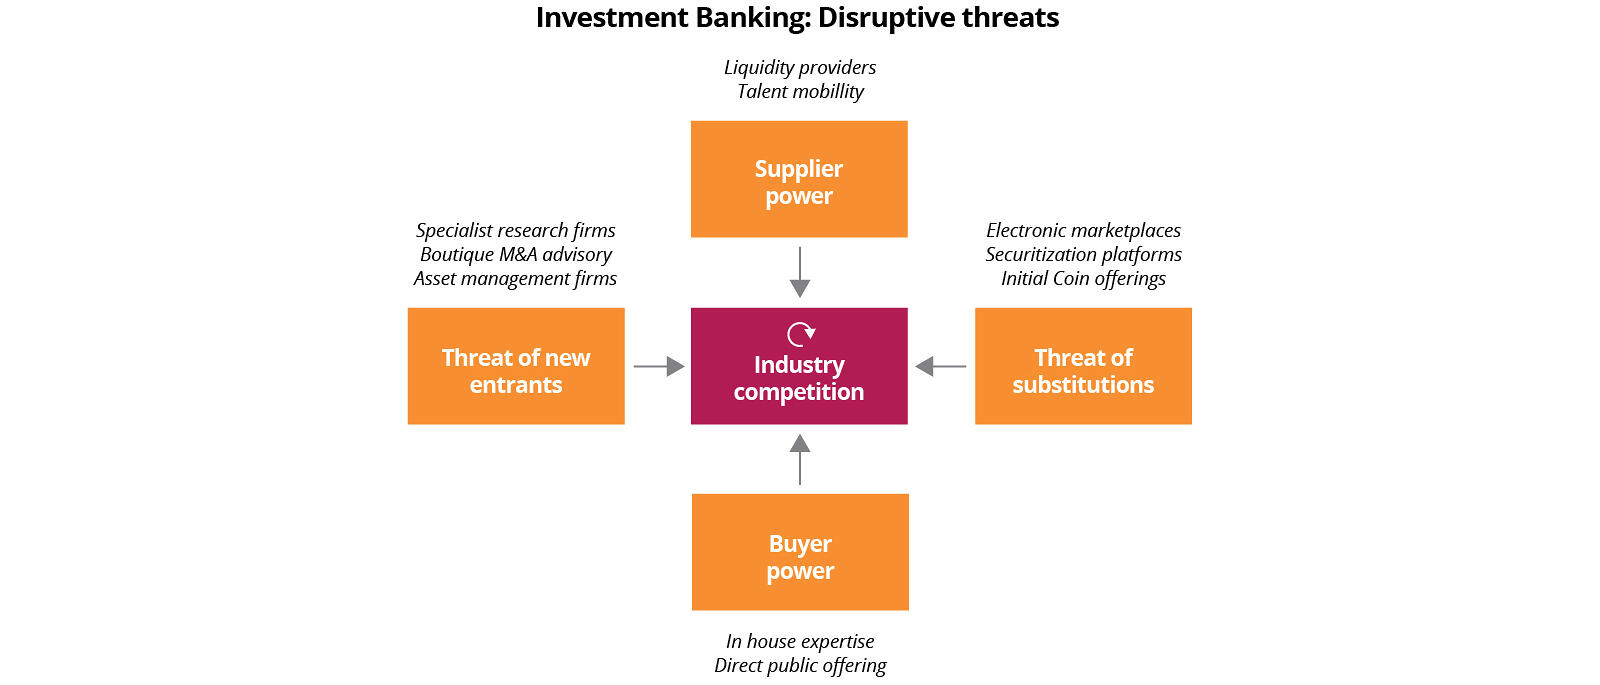 Investment Banking: Disruptive Threats